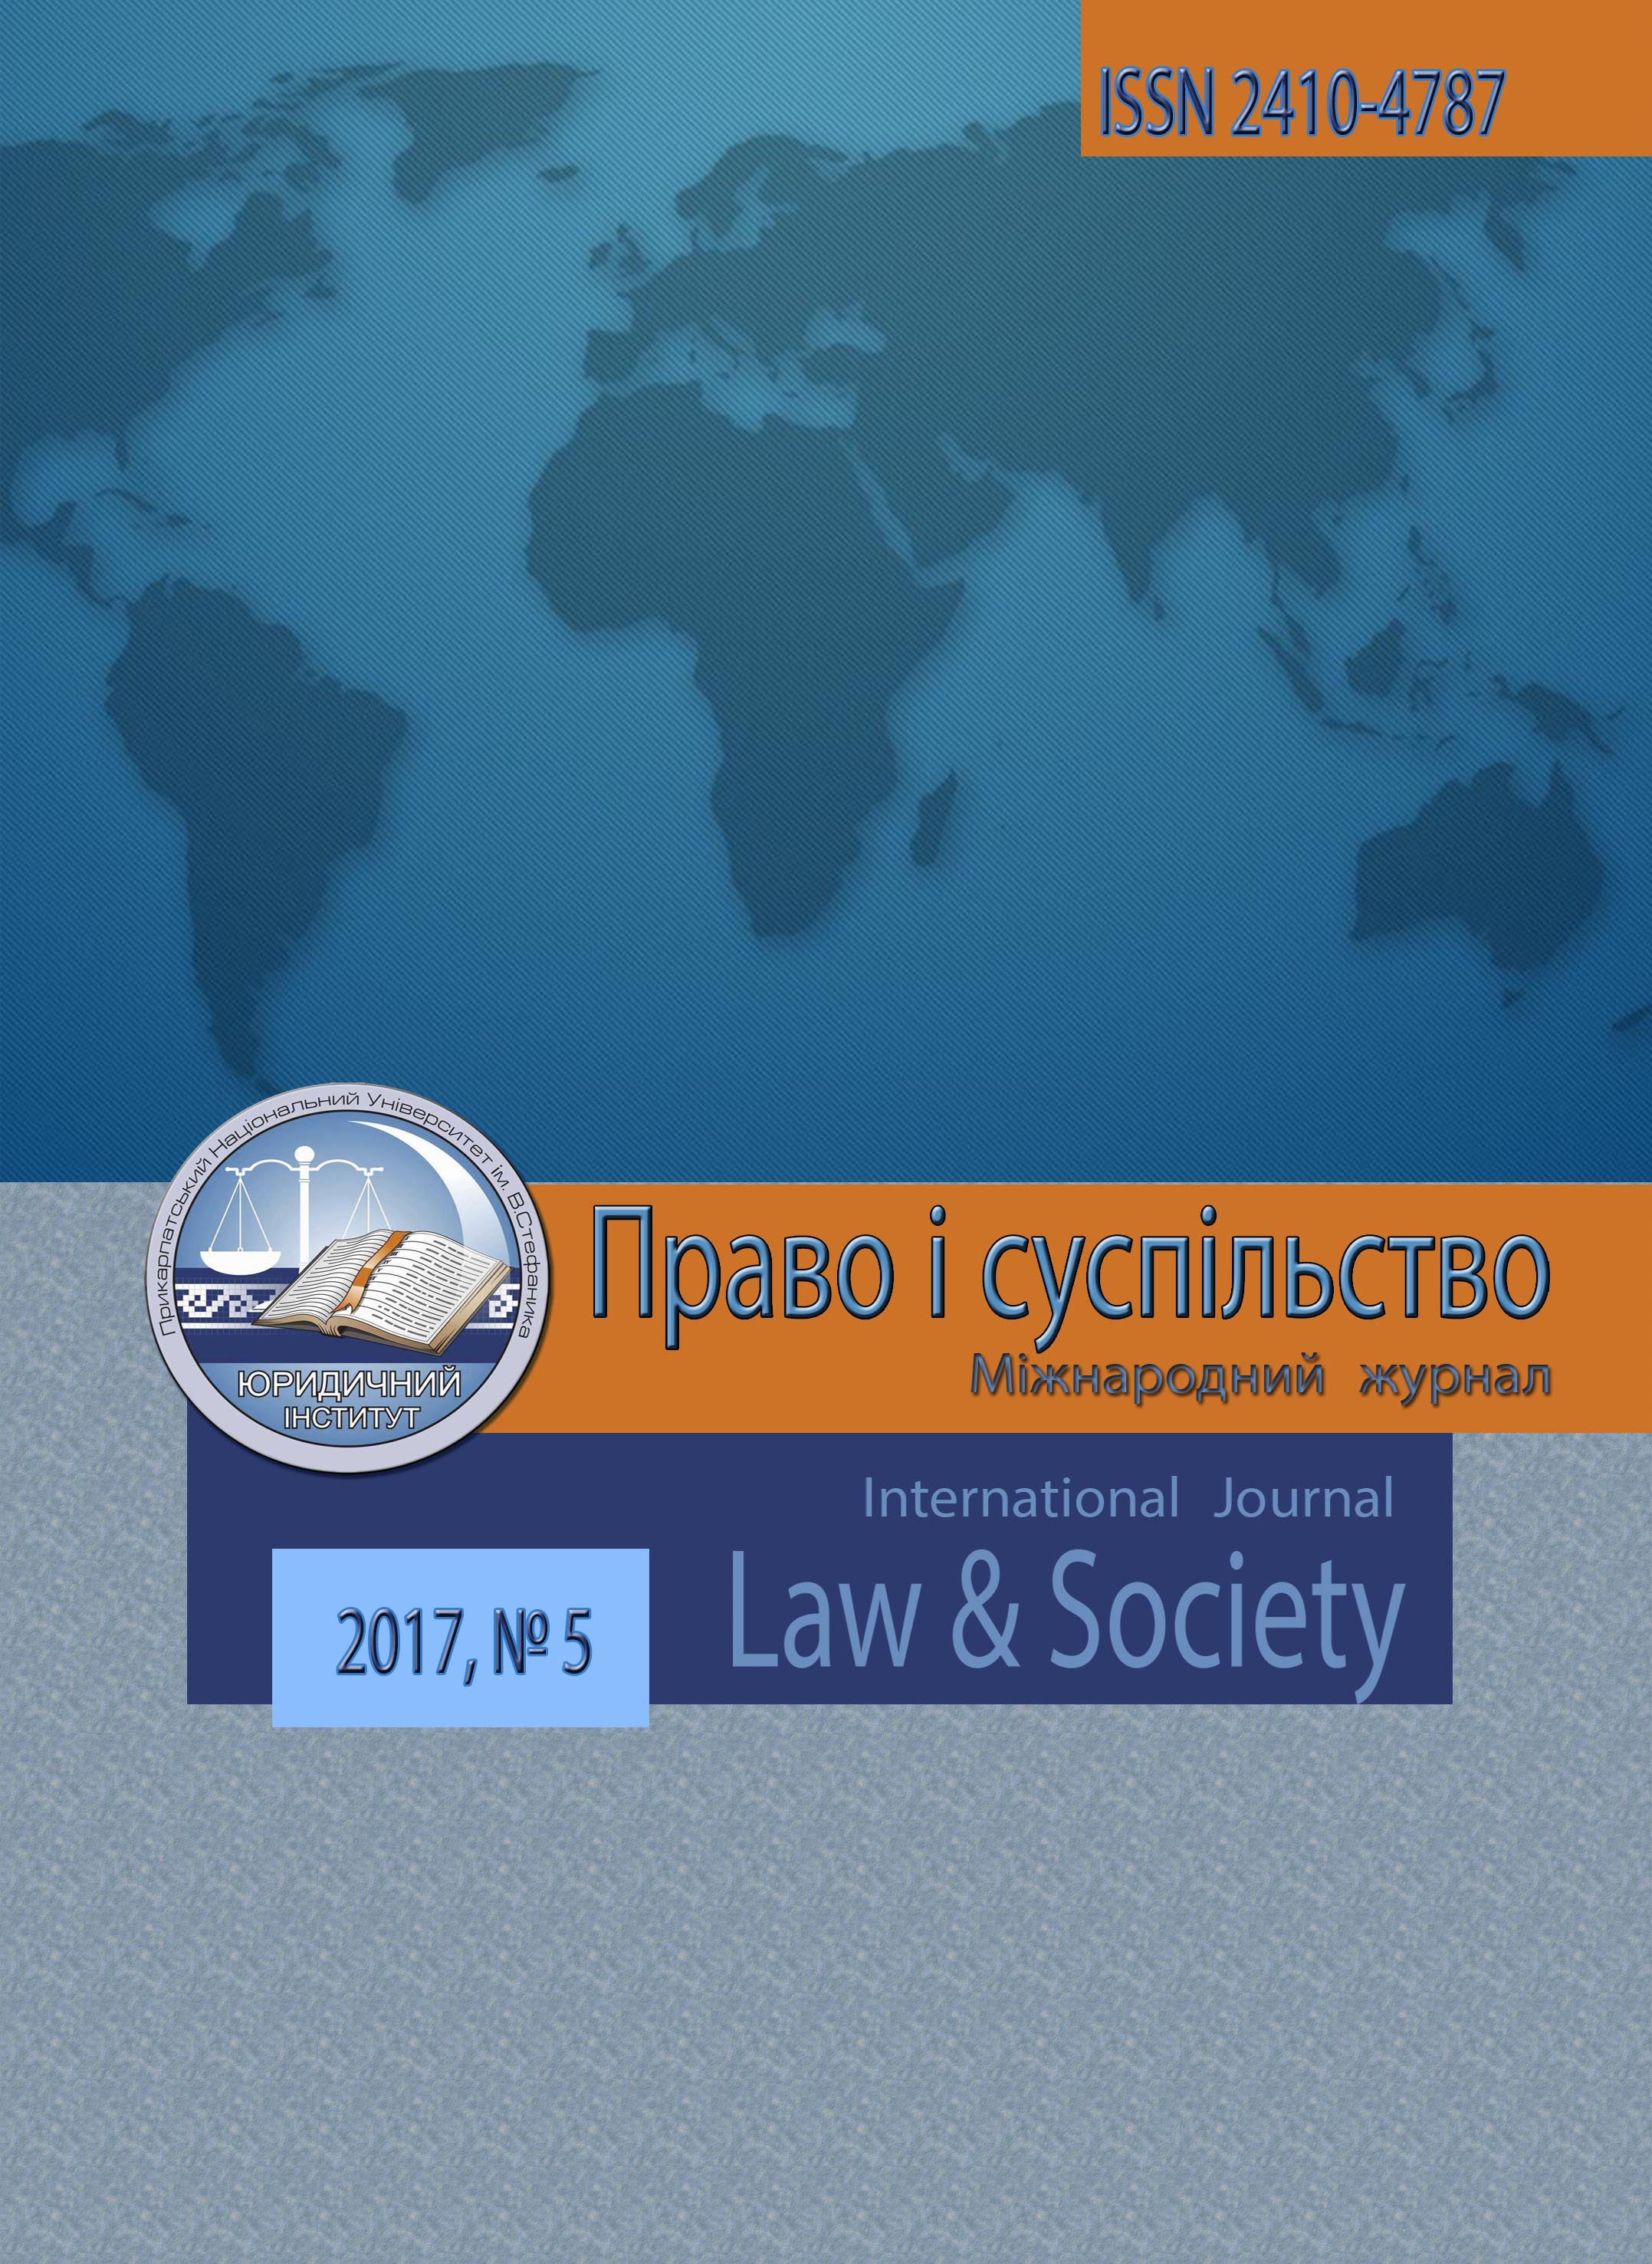 					View Vol. 5 (2017): Law&Society
				